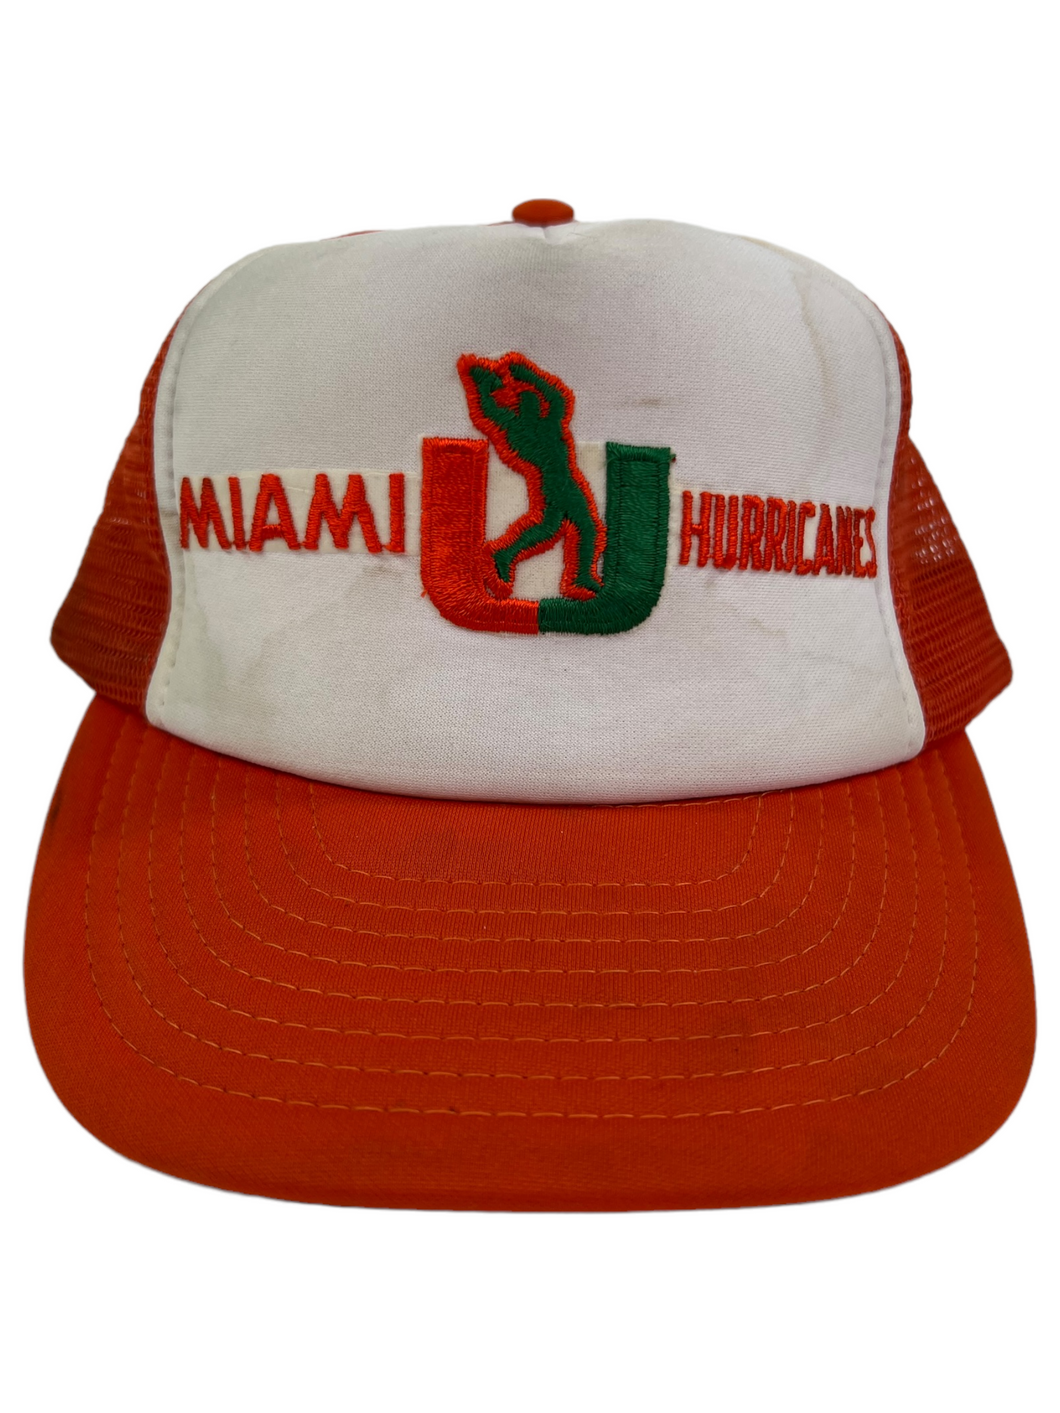 Vintage 90s University of Miami Hurricanes football mesh trucker SnapBack